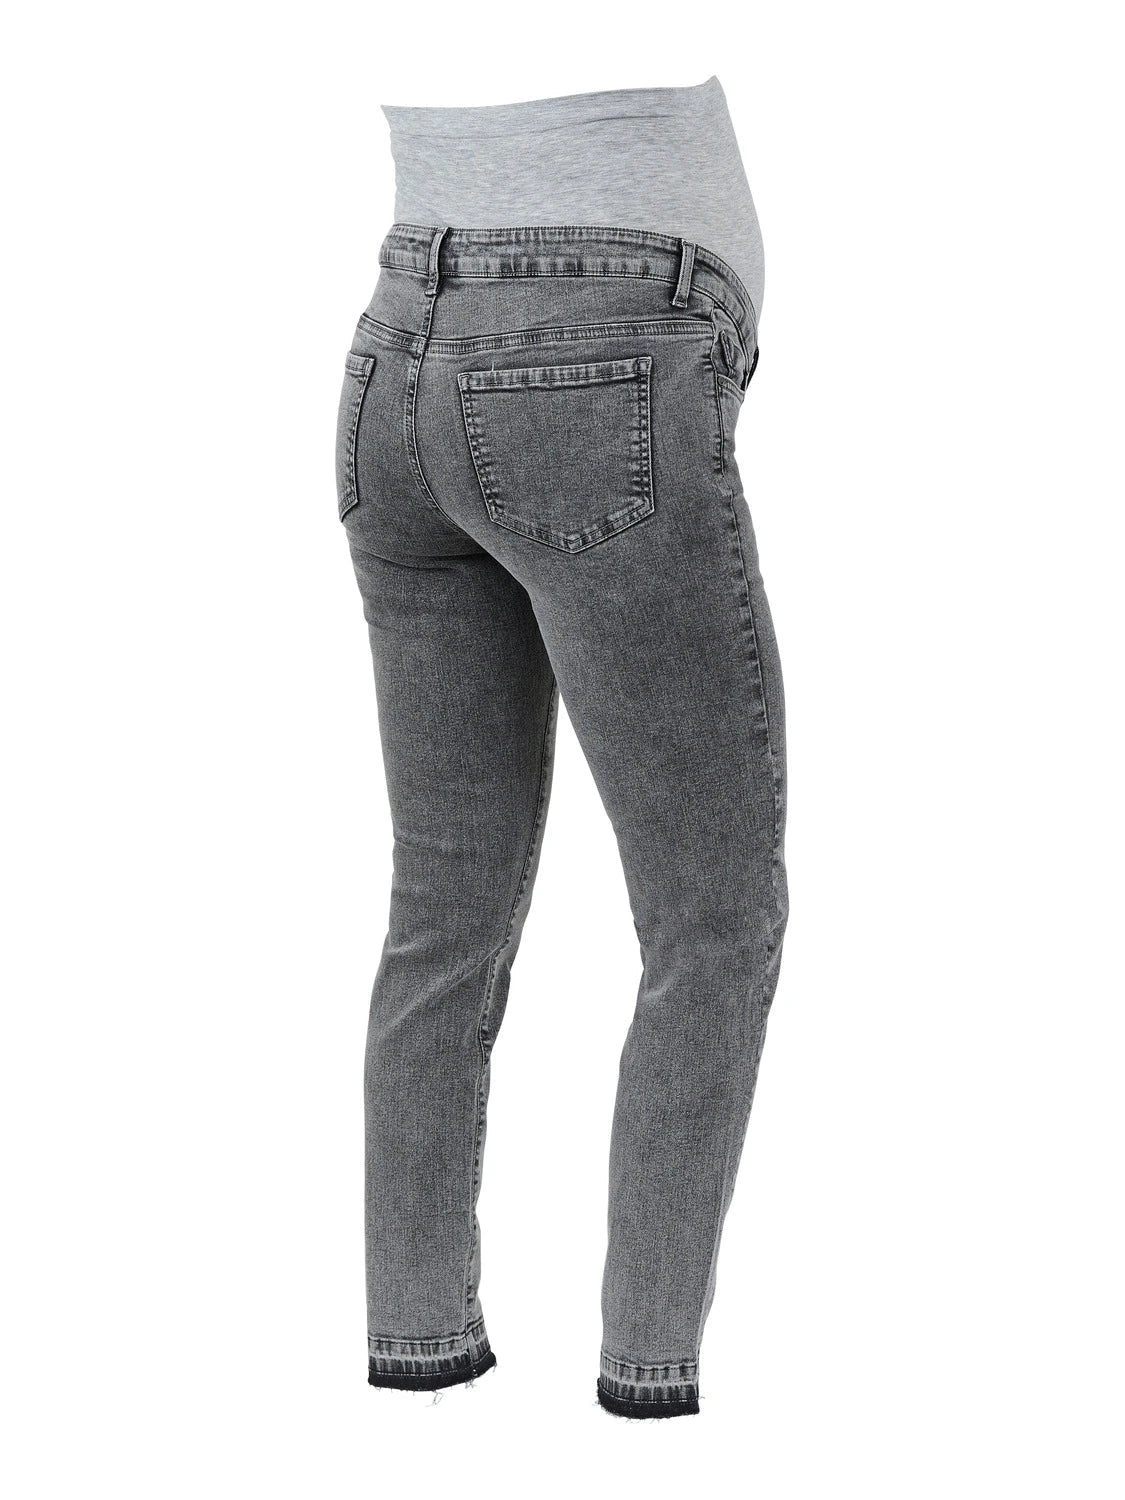 BOX OF BASICS STYLE HUDSON: Umstandsjeans aus Bio-Baumwolle in dirty Grey, ankle cut und Bauchband - Jeans-9•BORROUGHS